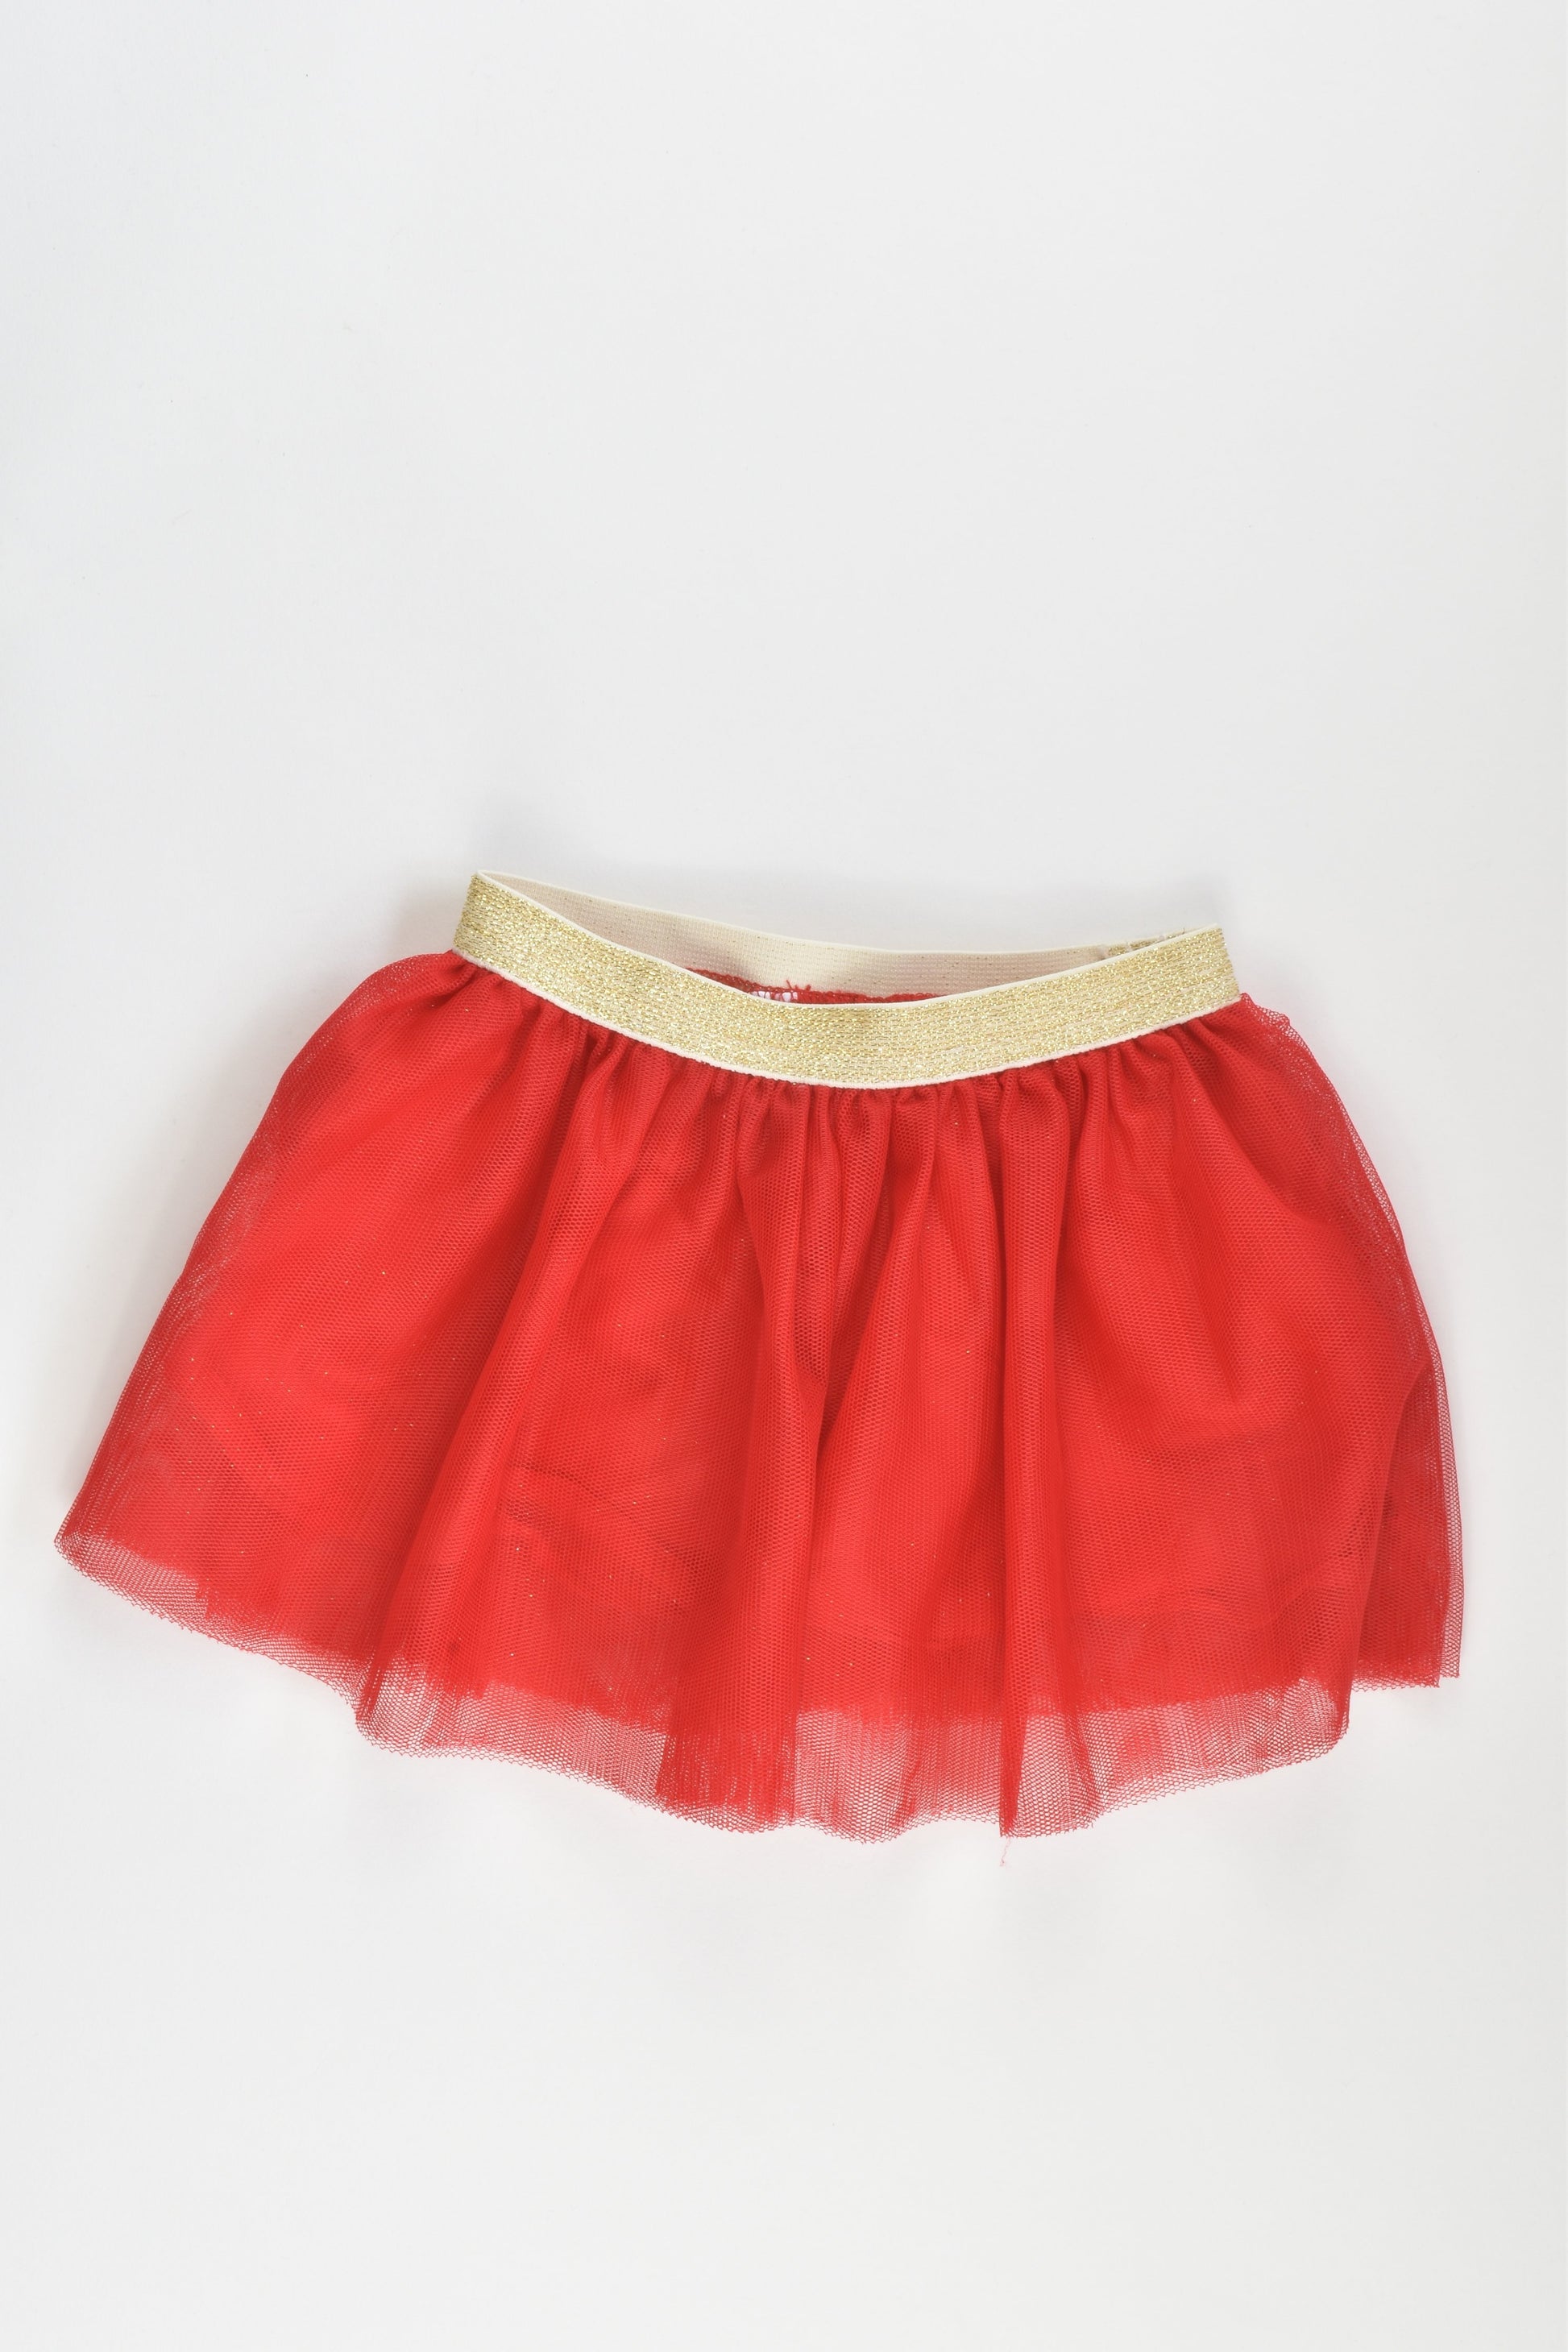 Target Size 00 Tulle Skirt